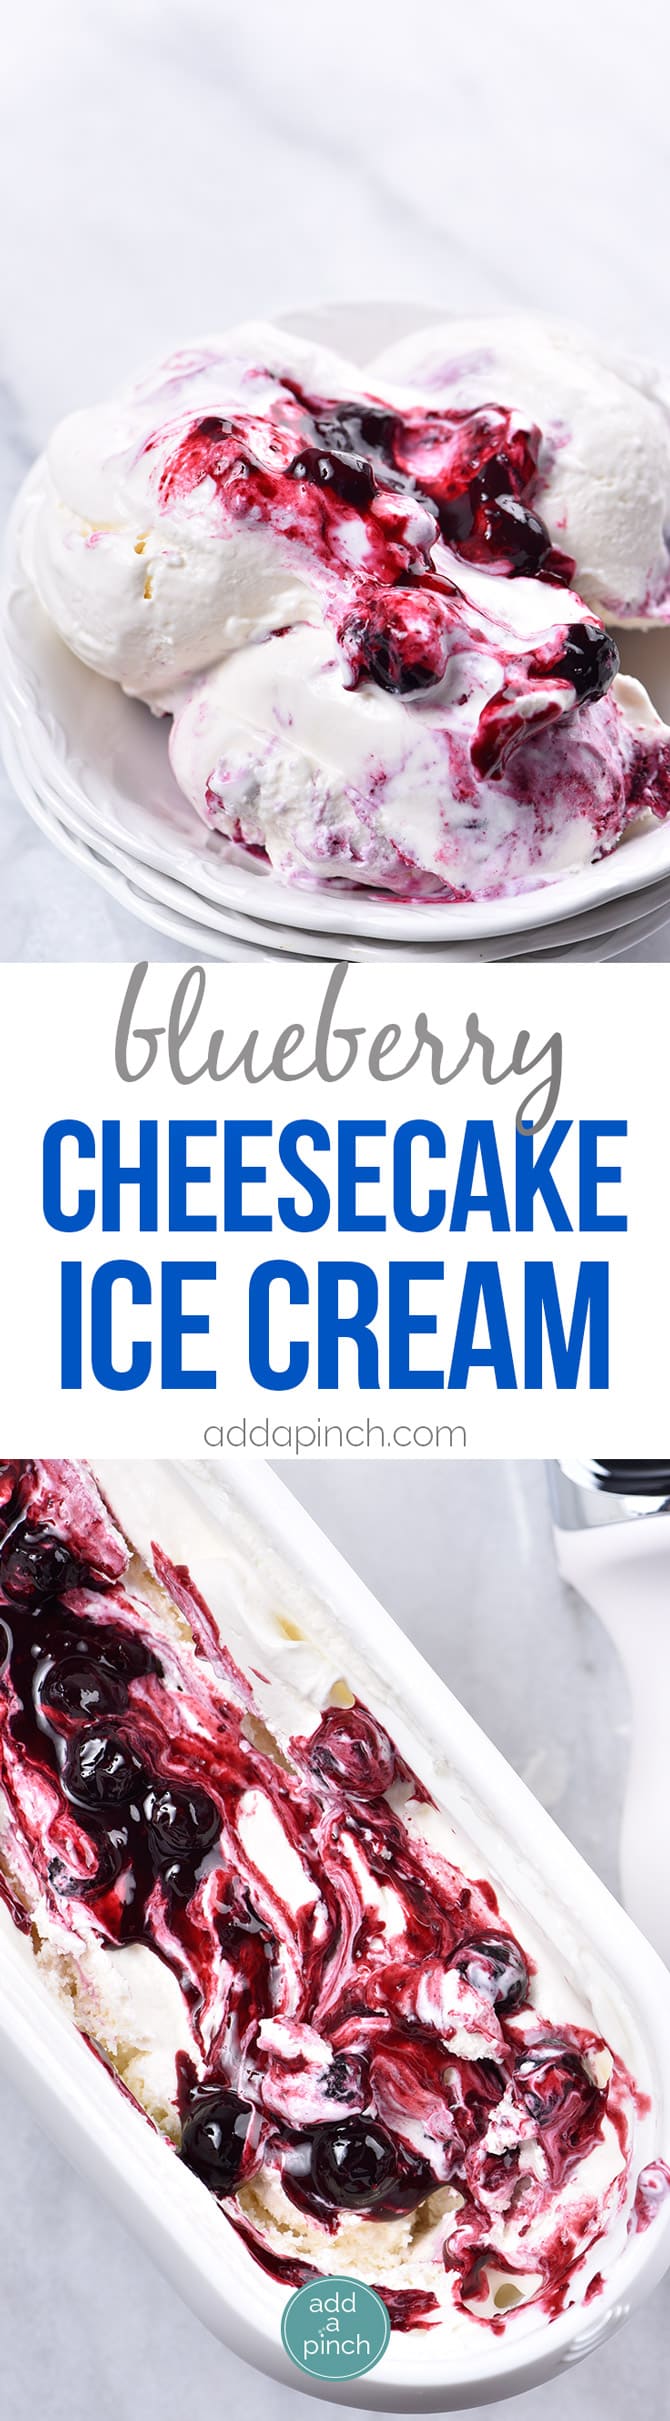 Blueberry Cheesecake Ice Cream Recipe - This Blueberry Cheesecake Ice Cream recipe makes an easy and delicious dessert recipe! A family favorite, this includes a churn and a no-churn ice cream recipe method! // addapinch.com